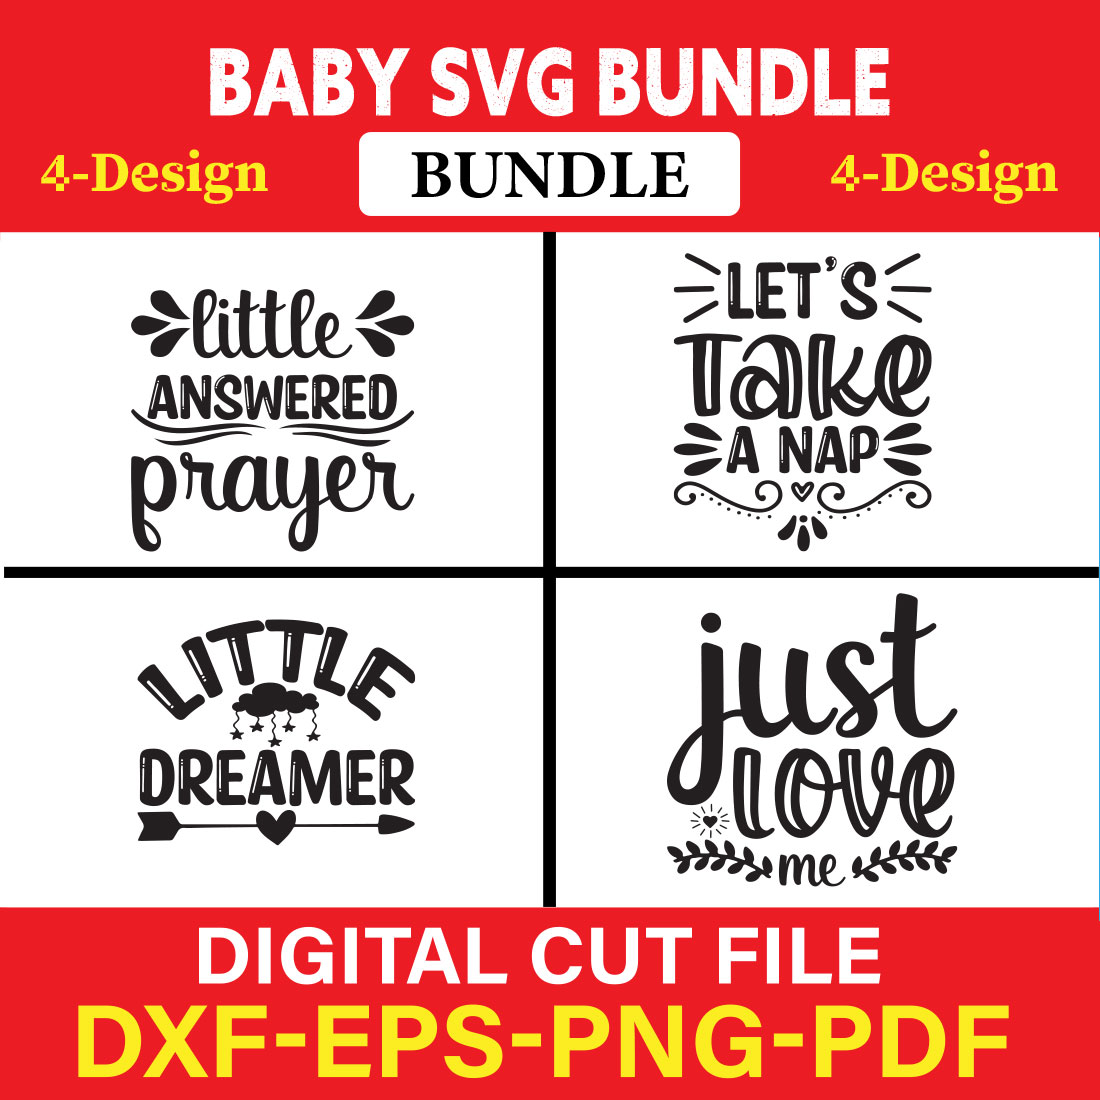 Baby T-shirt Design Bundle Vol-17 cover image.